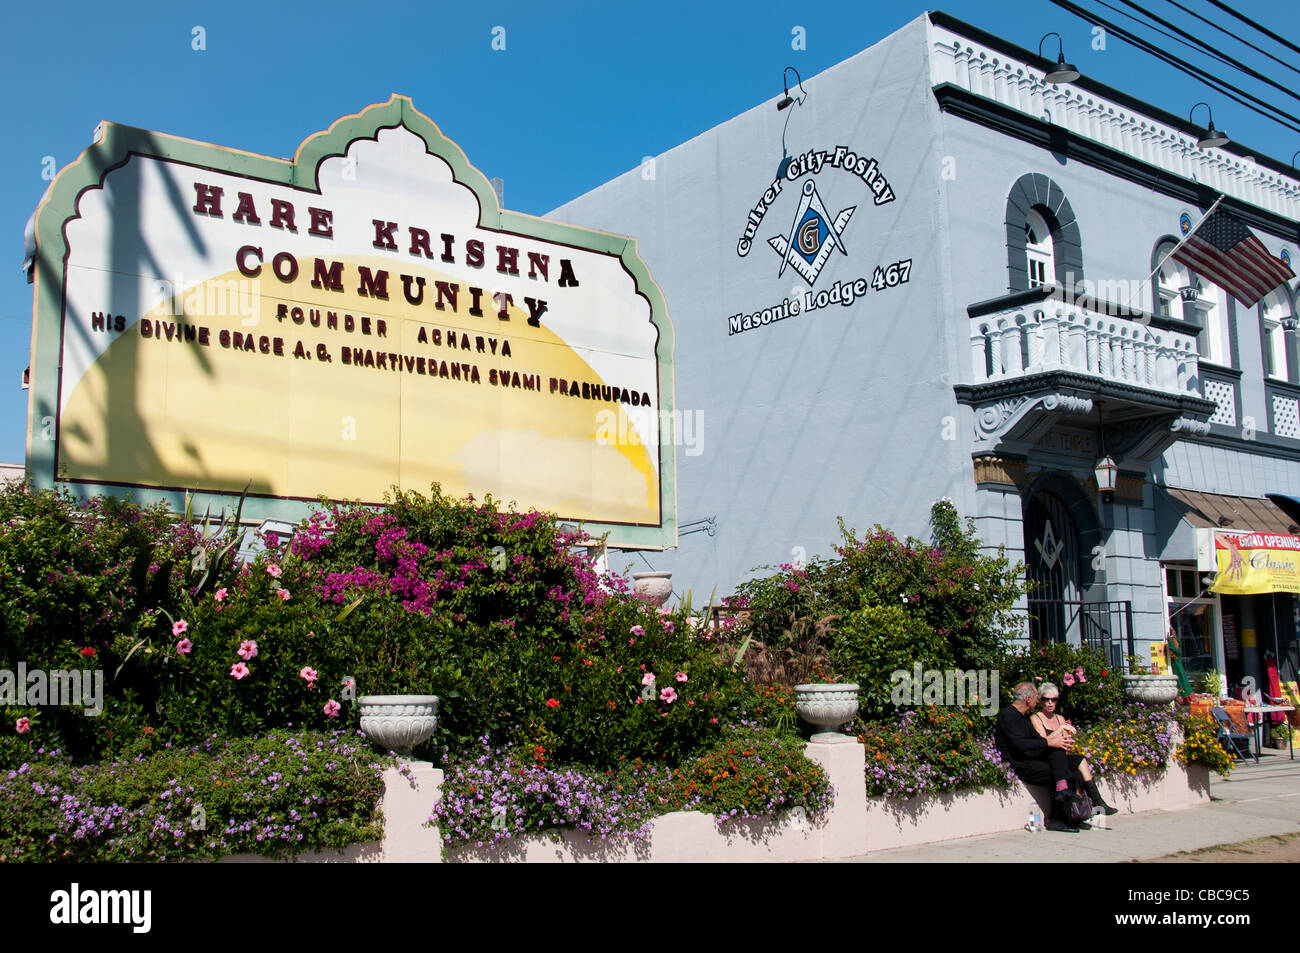 Hare Krishna Community Culver City California United States Los Angeles Stock Photo